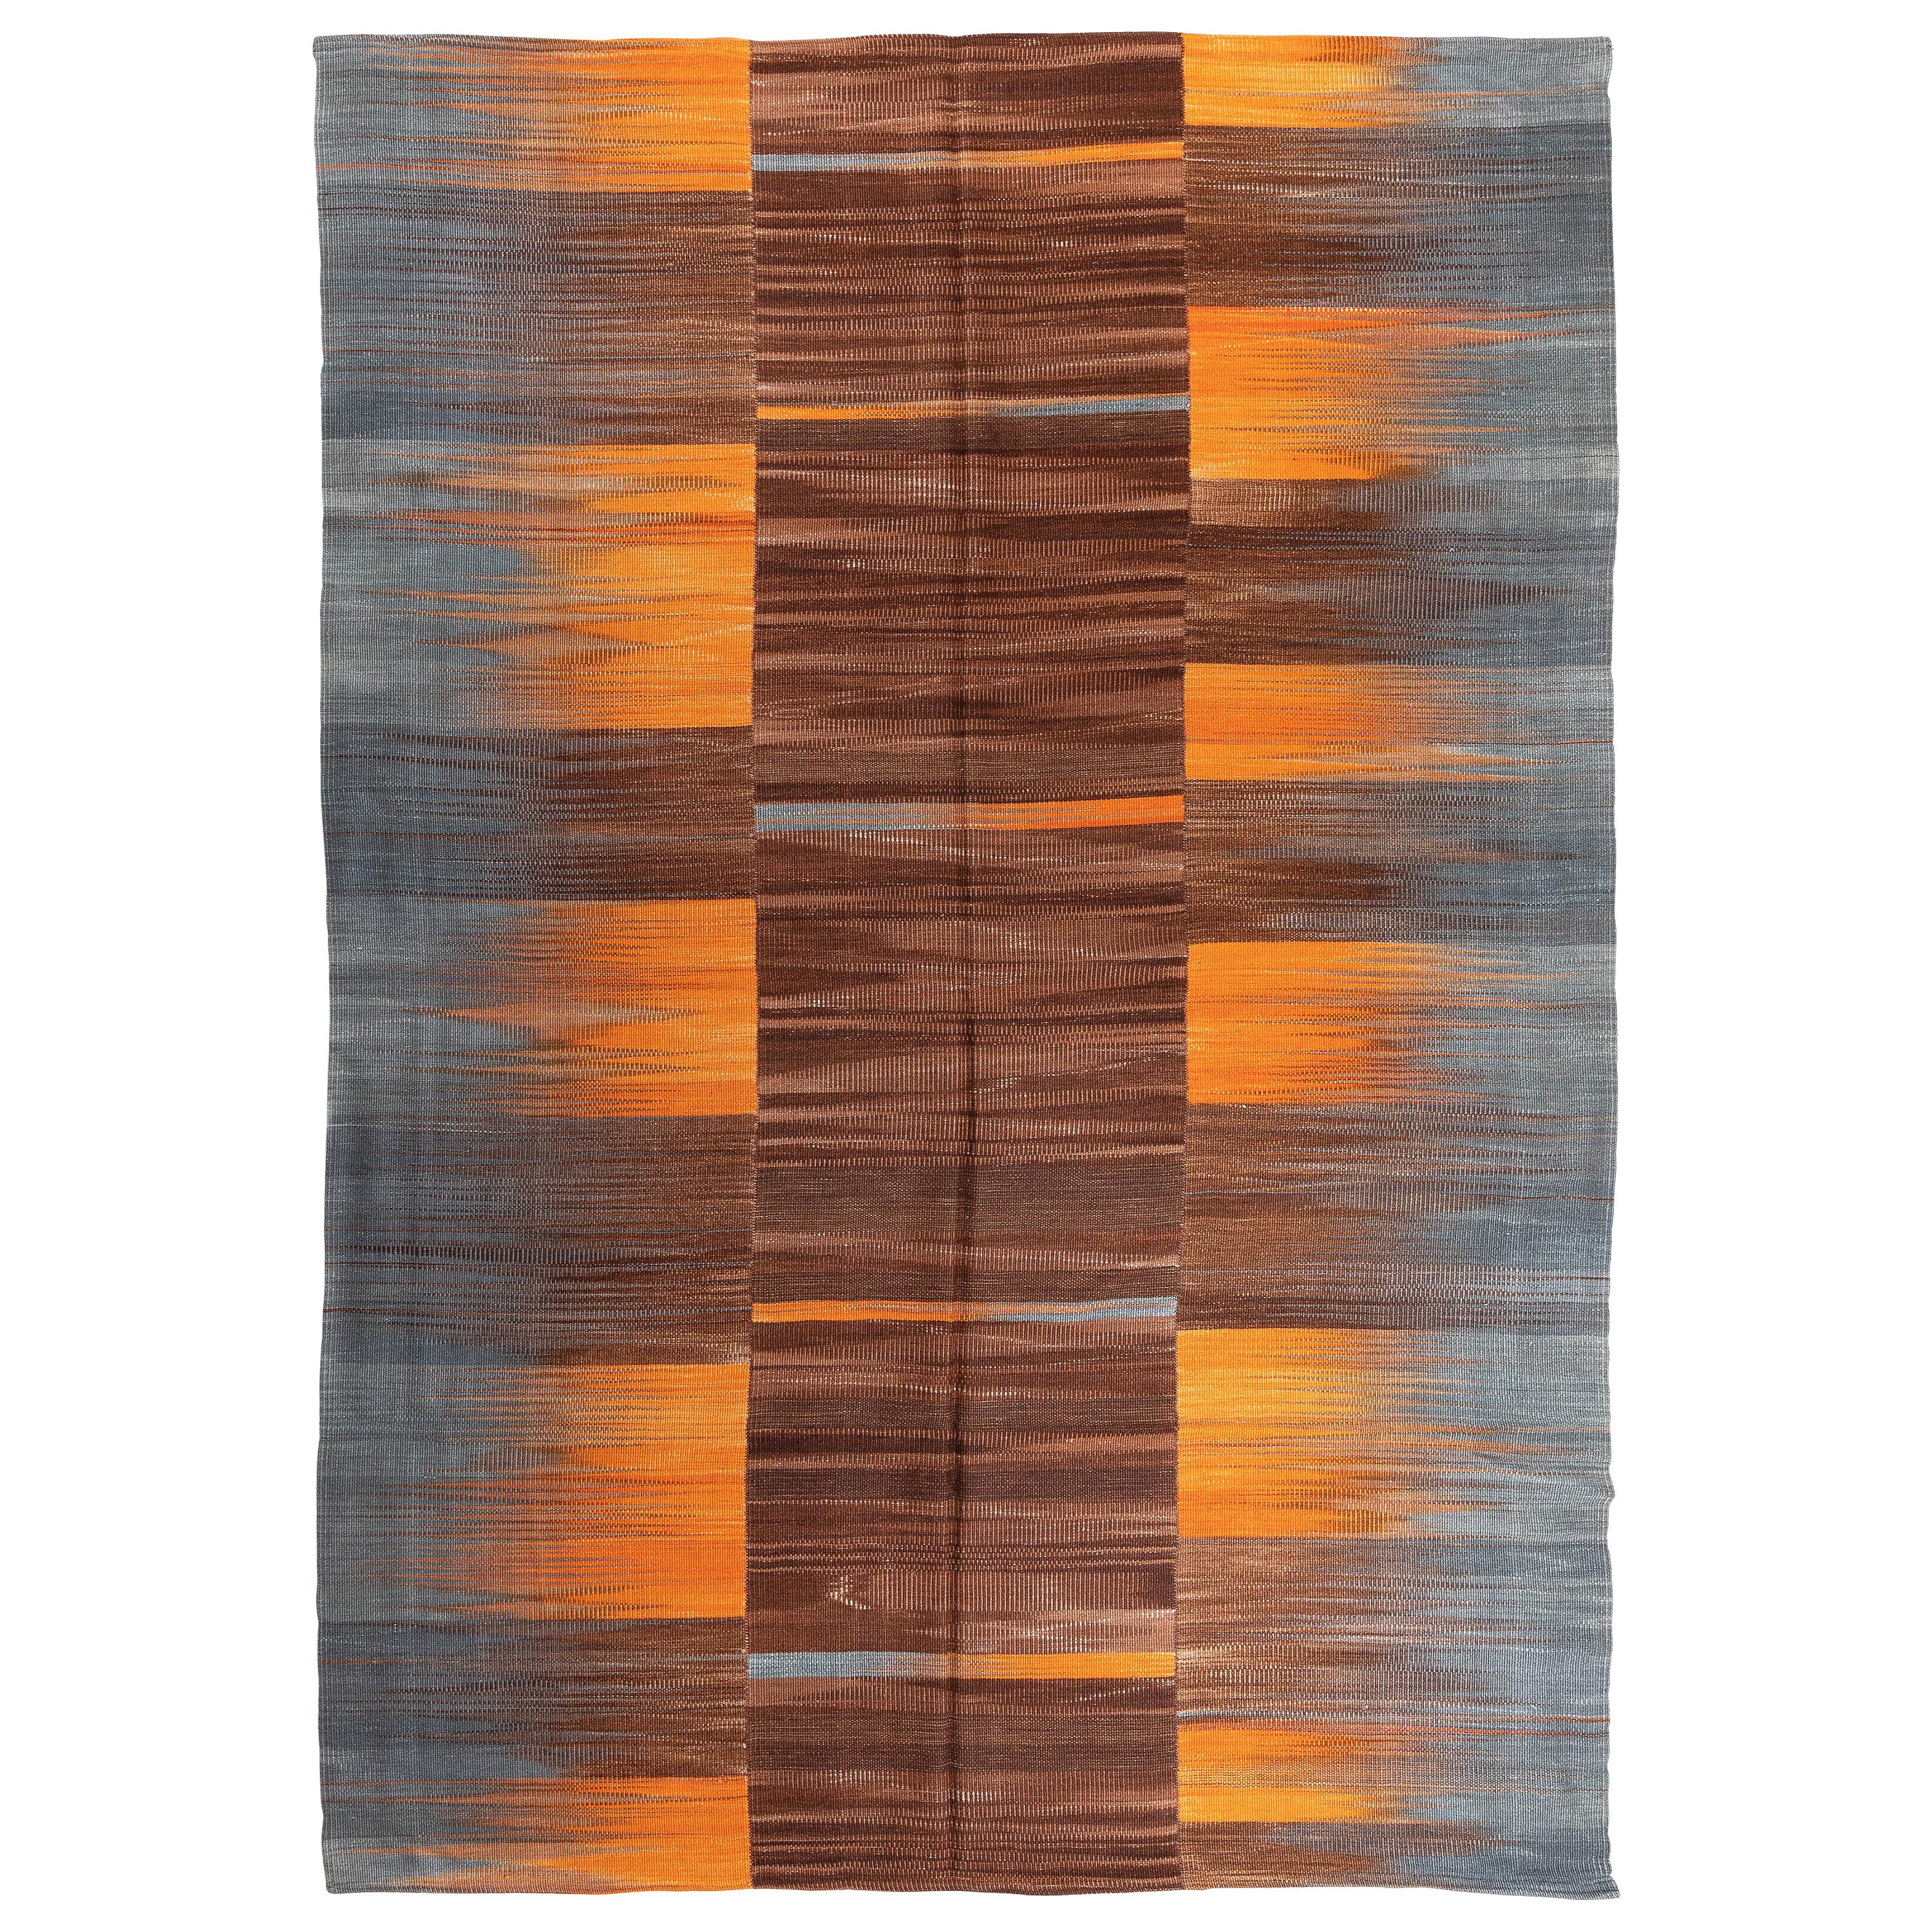 7'8'' x 10'9' New Turkish Kilim, Modern Double Sided Rug in Orange, Gray & Brown